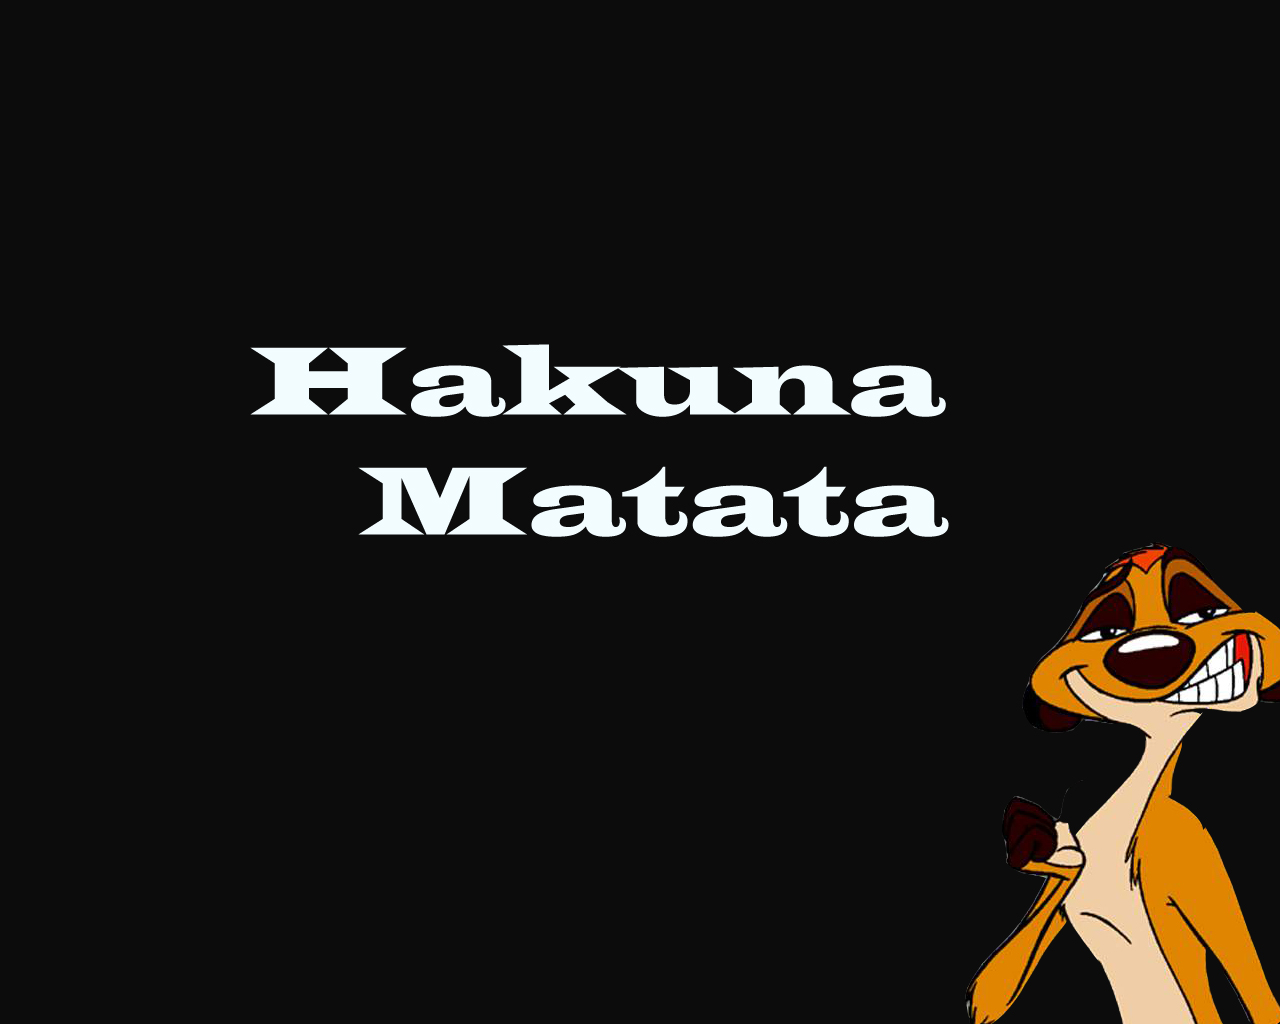 Hakuna Matata by Squirrelke on